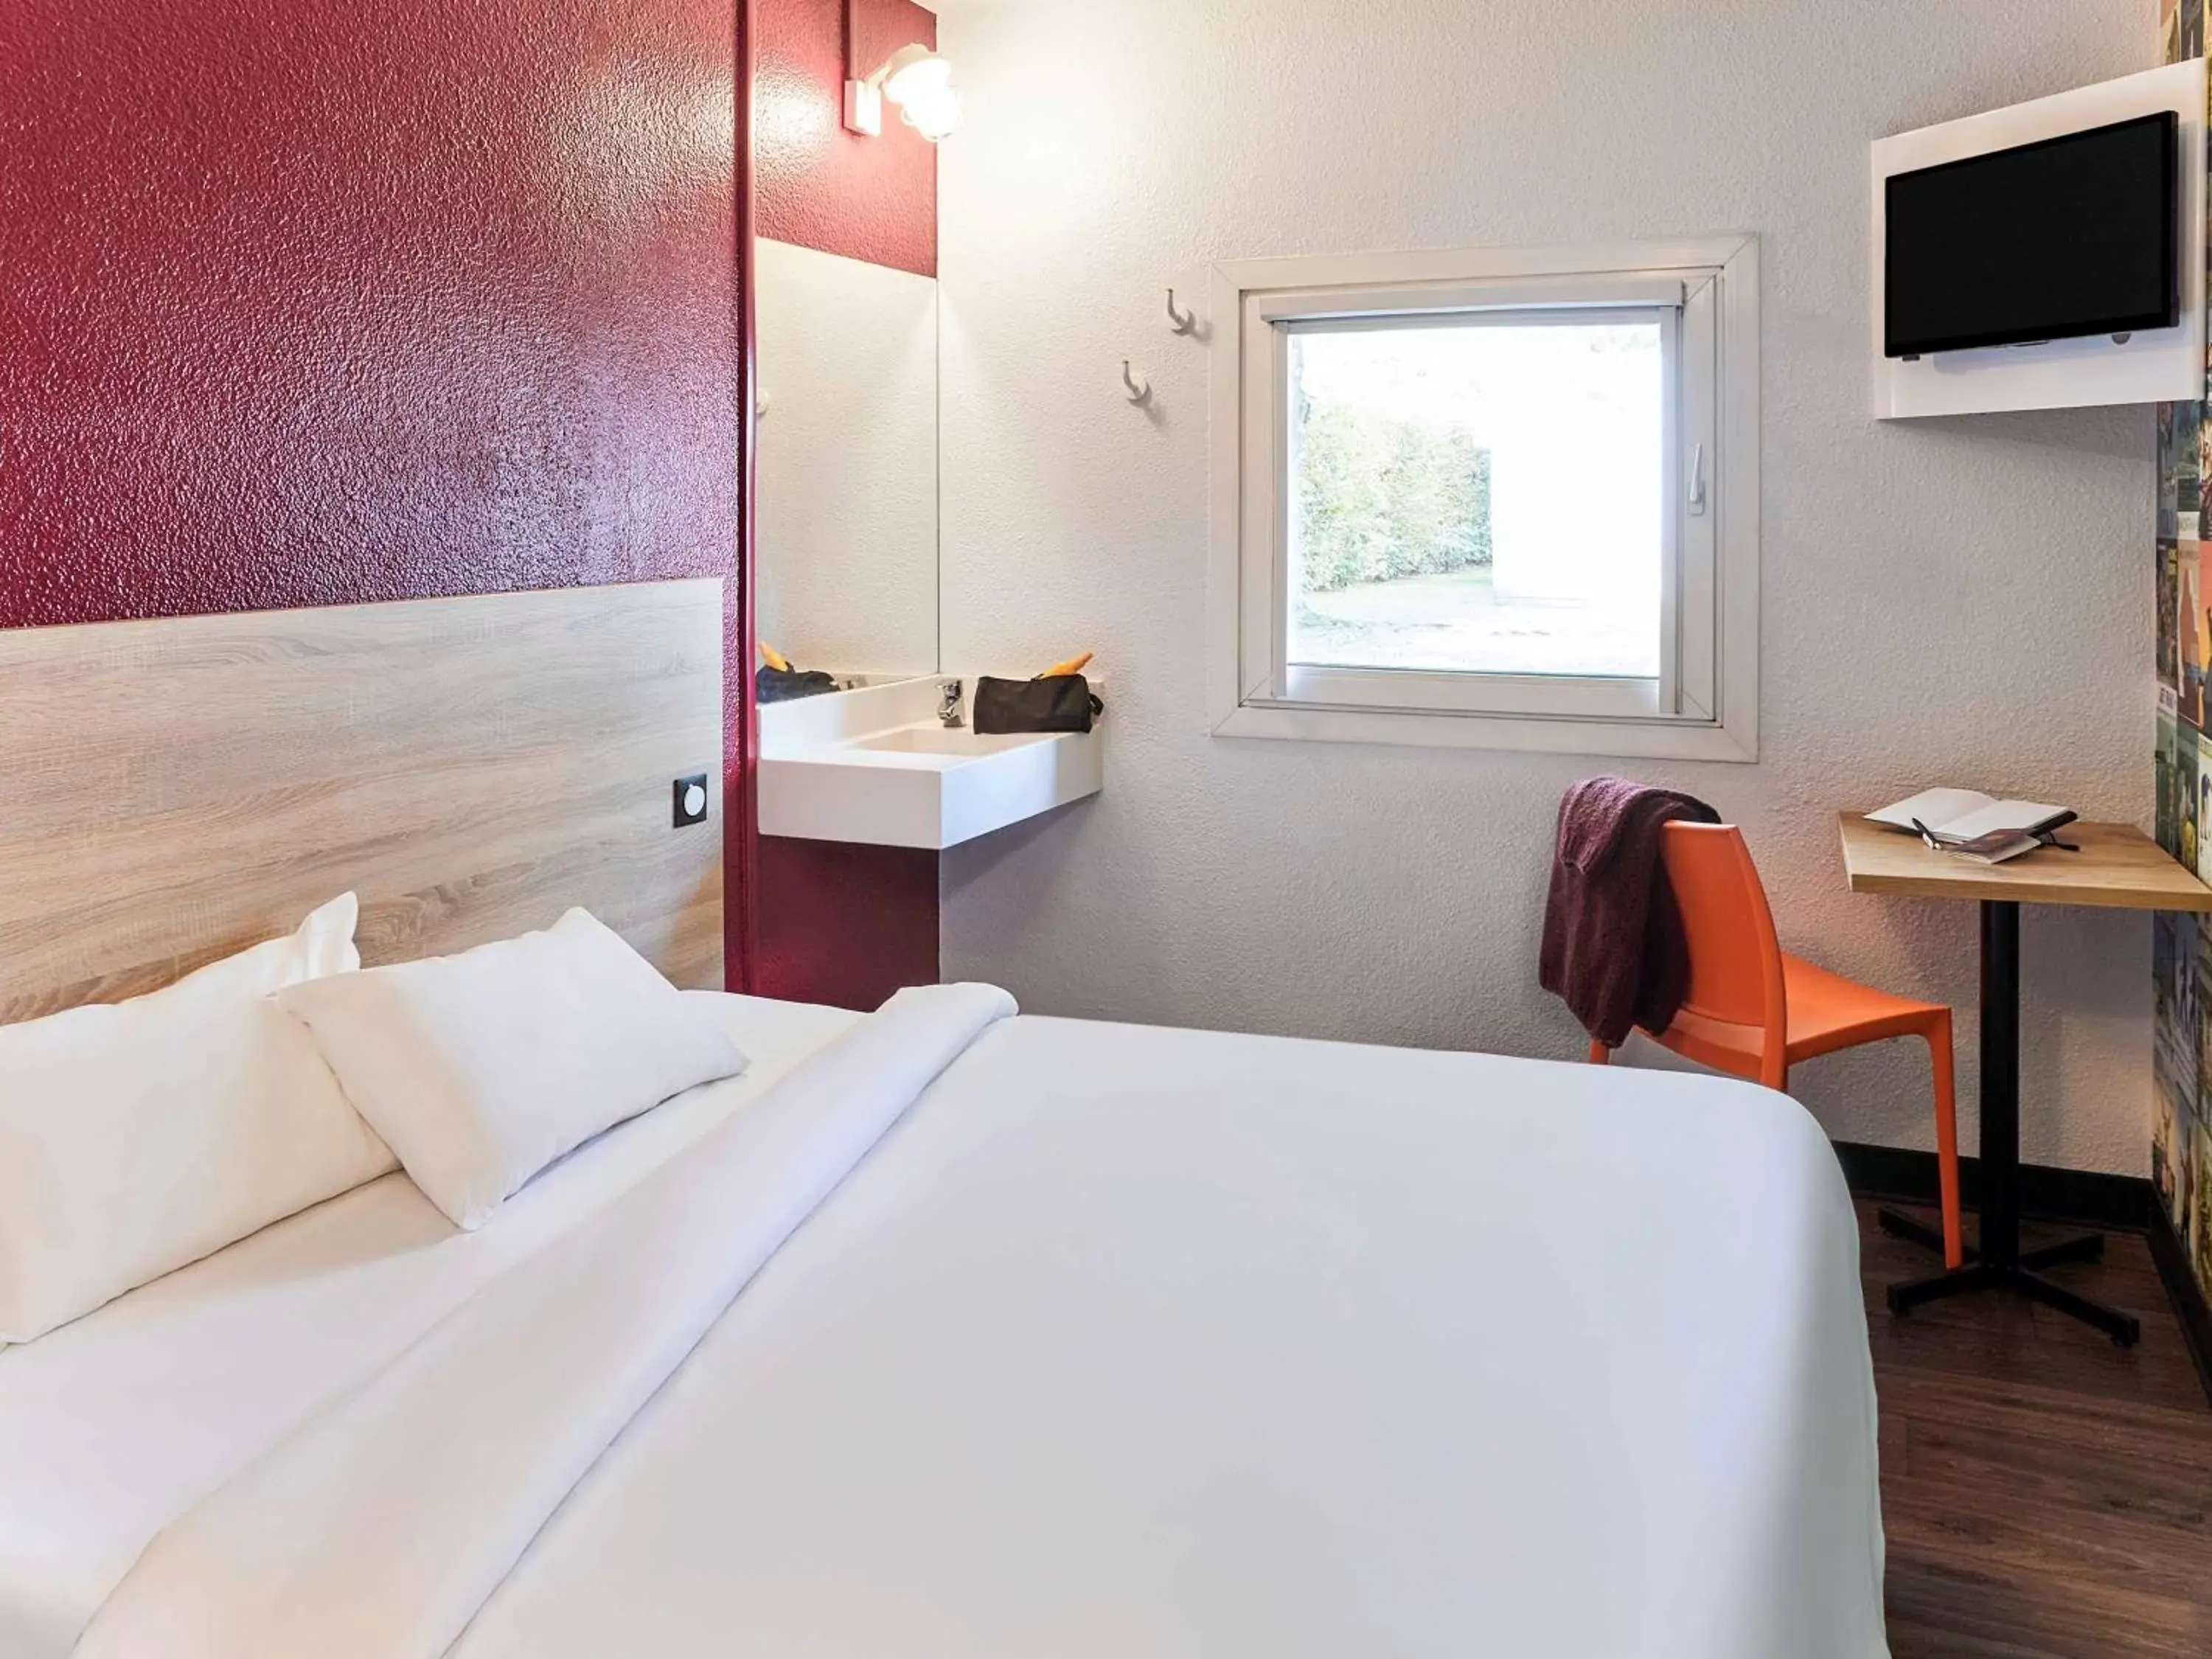 Bathroom, Bed in hotelF1 Rouen Sud Parc Expos